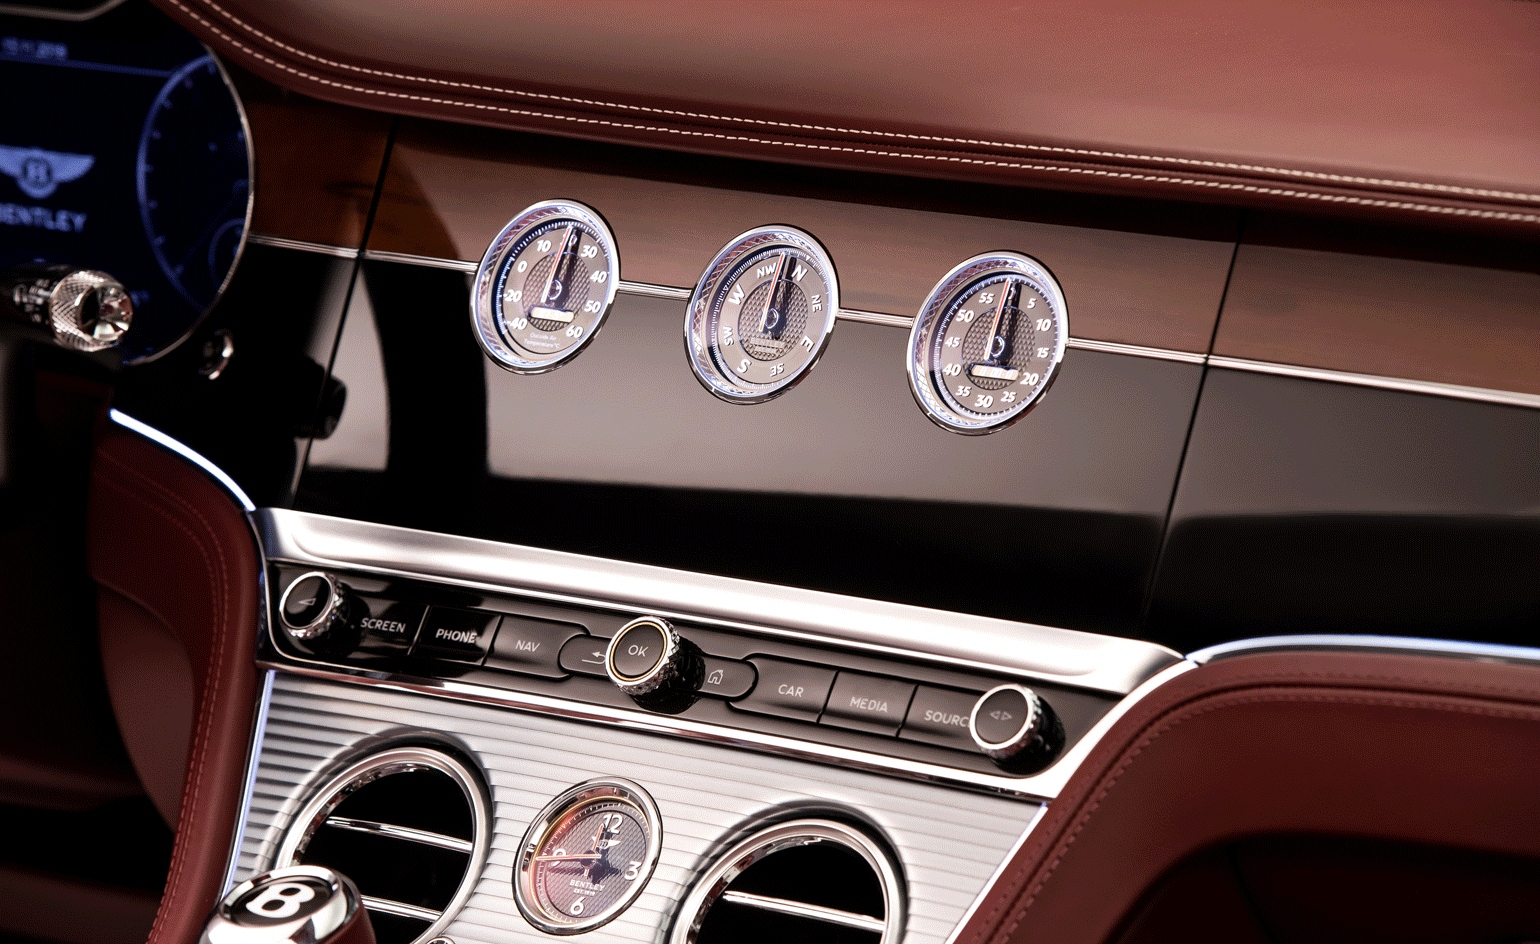 Interior of the Bentley Continental GT Convertible